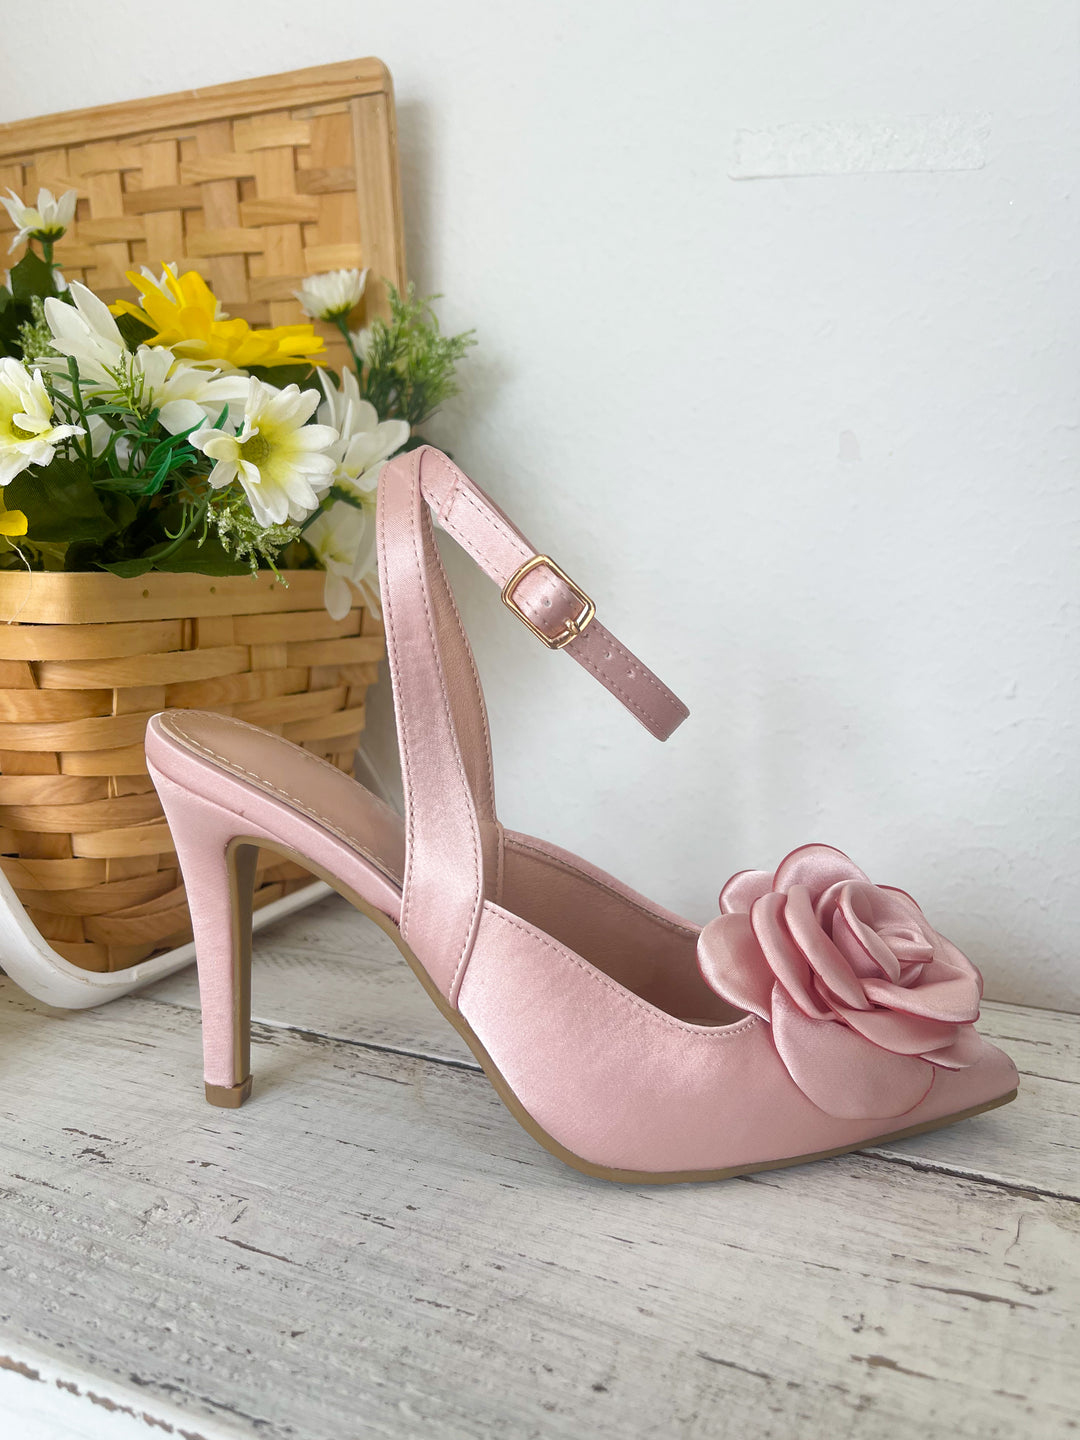 My Pink Rose Heel